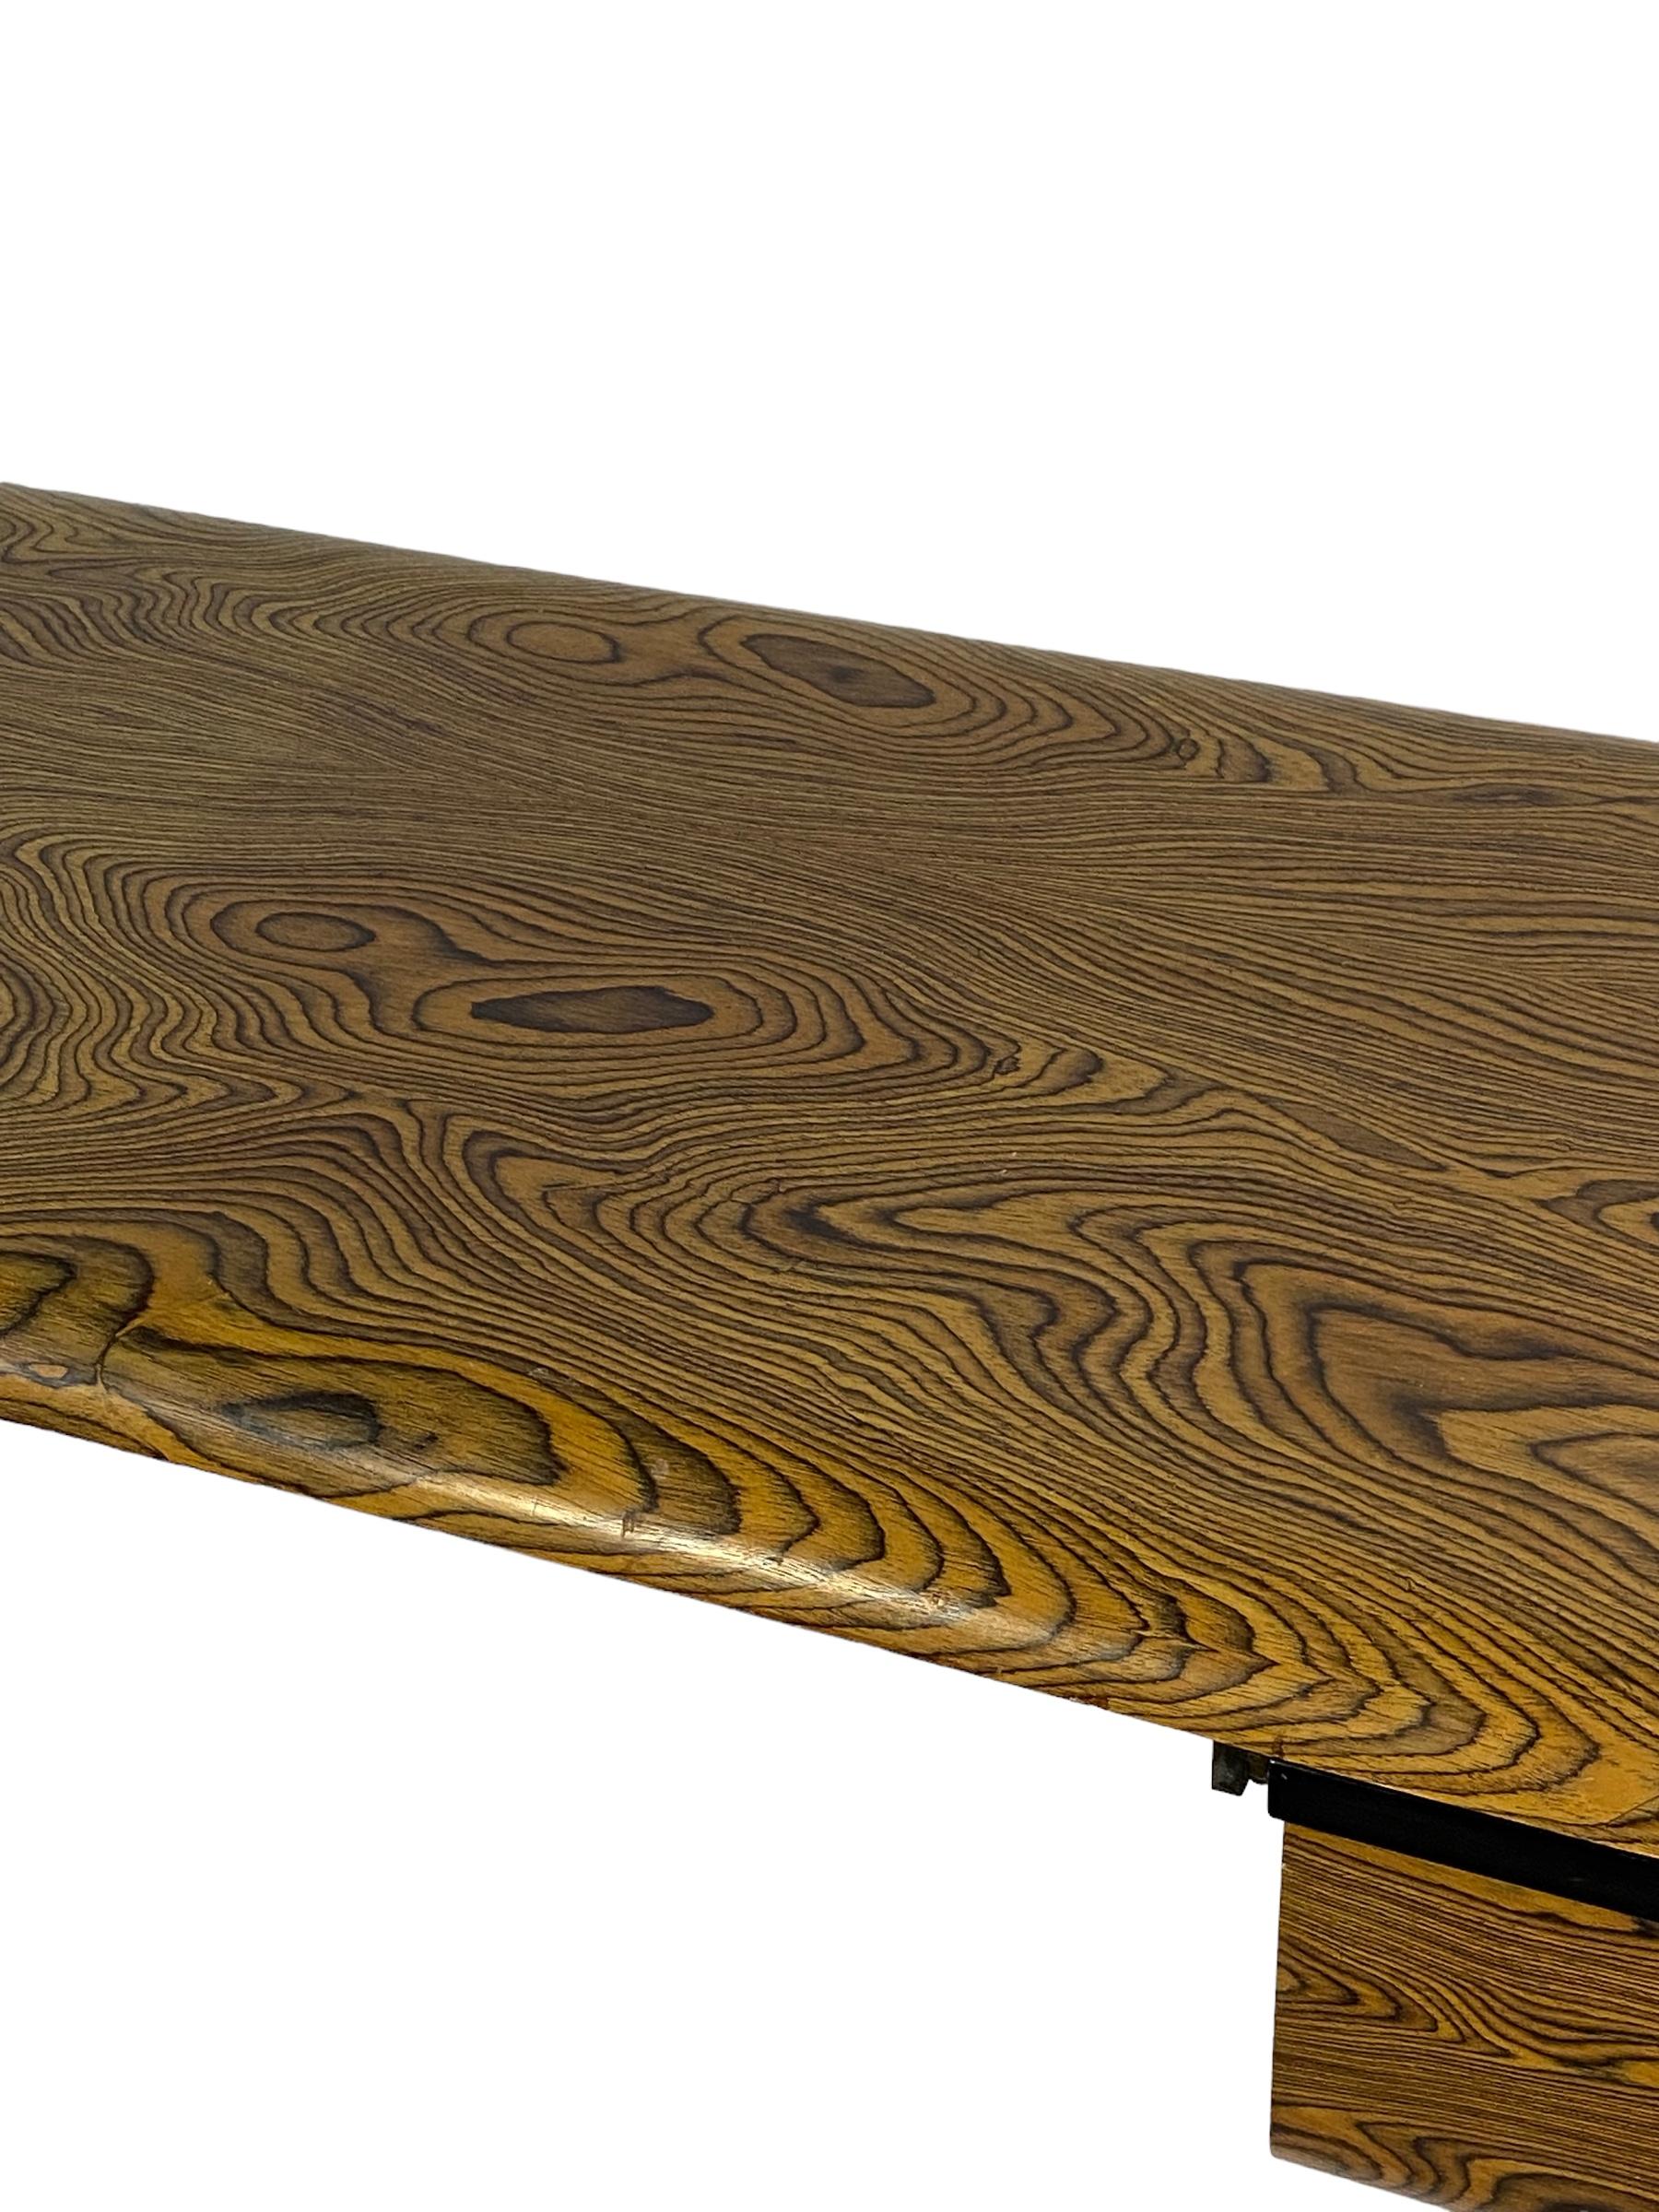 Herman Miller Zebra Wood and Chrome Desk Designed by Peter Protzman 1